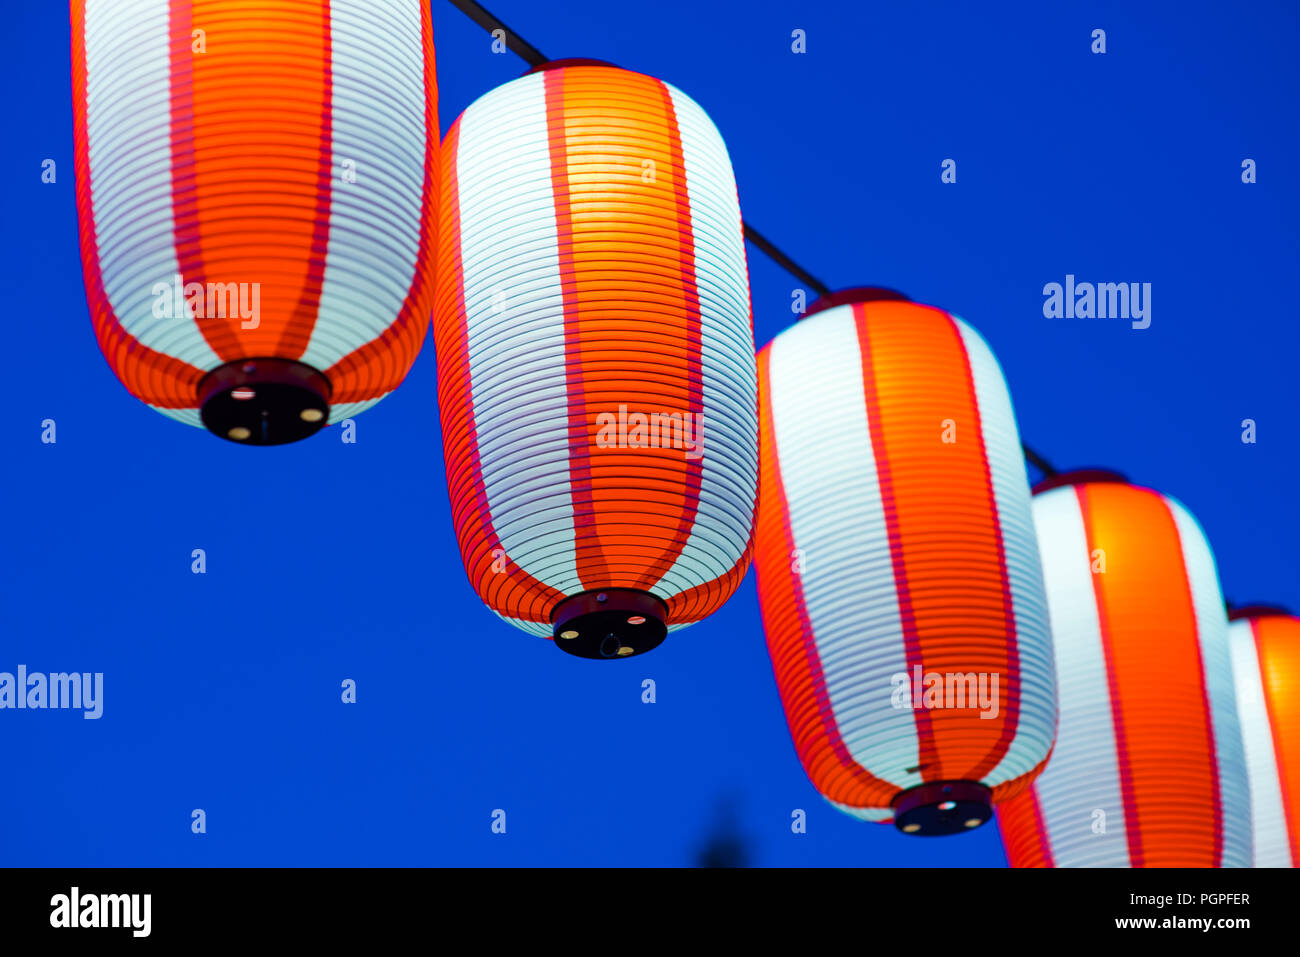 Chinese new year lanterns in china town Stock Photo